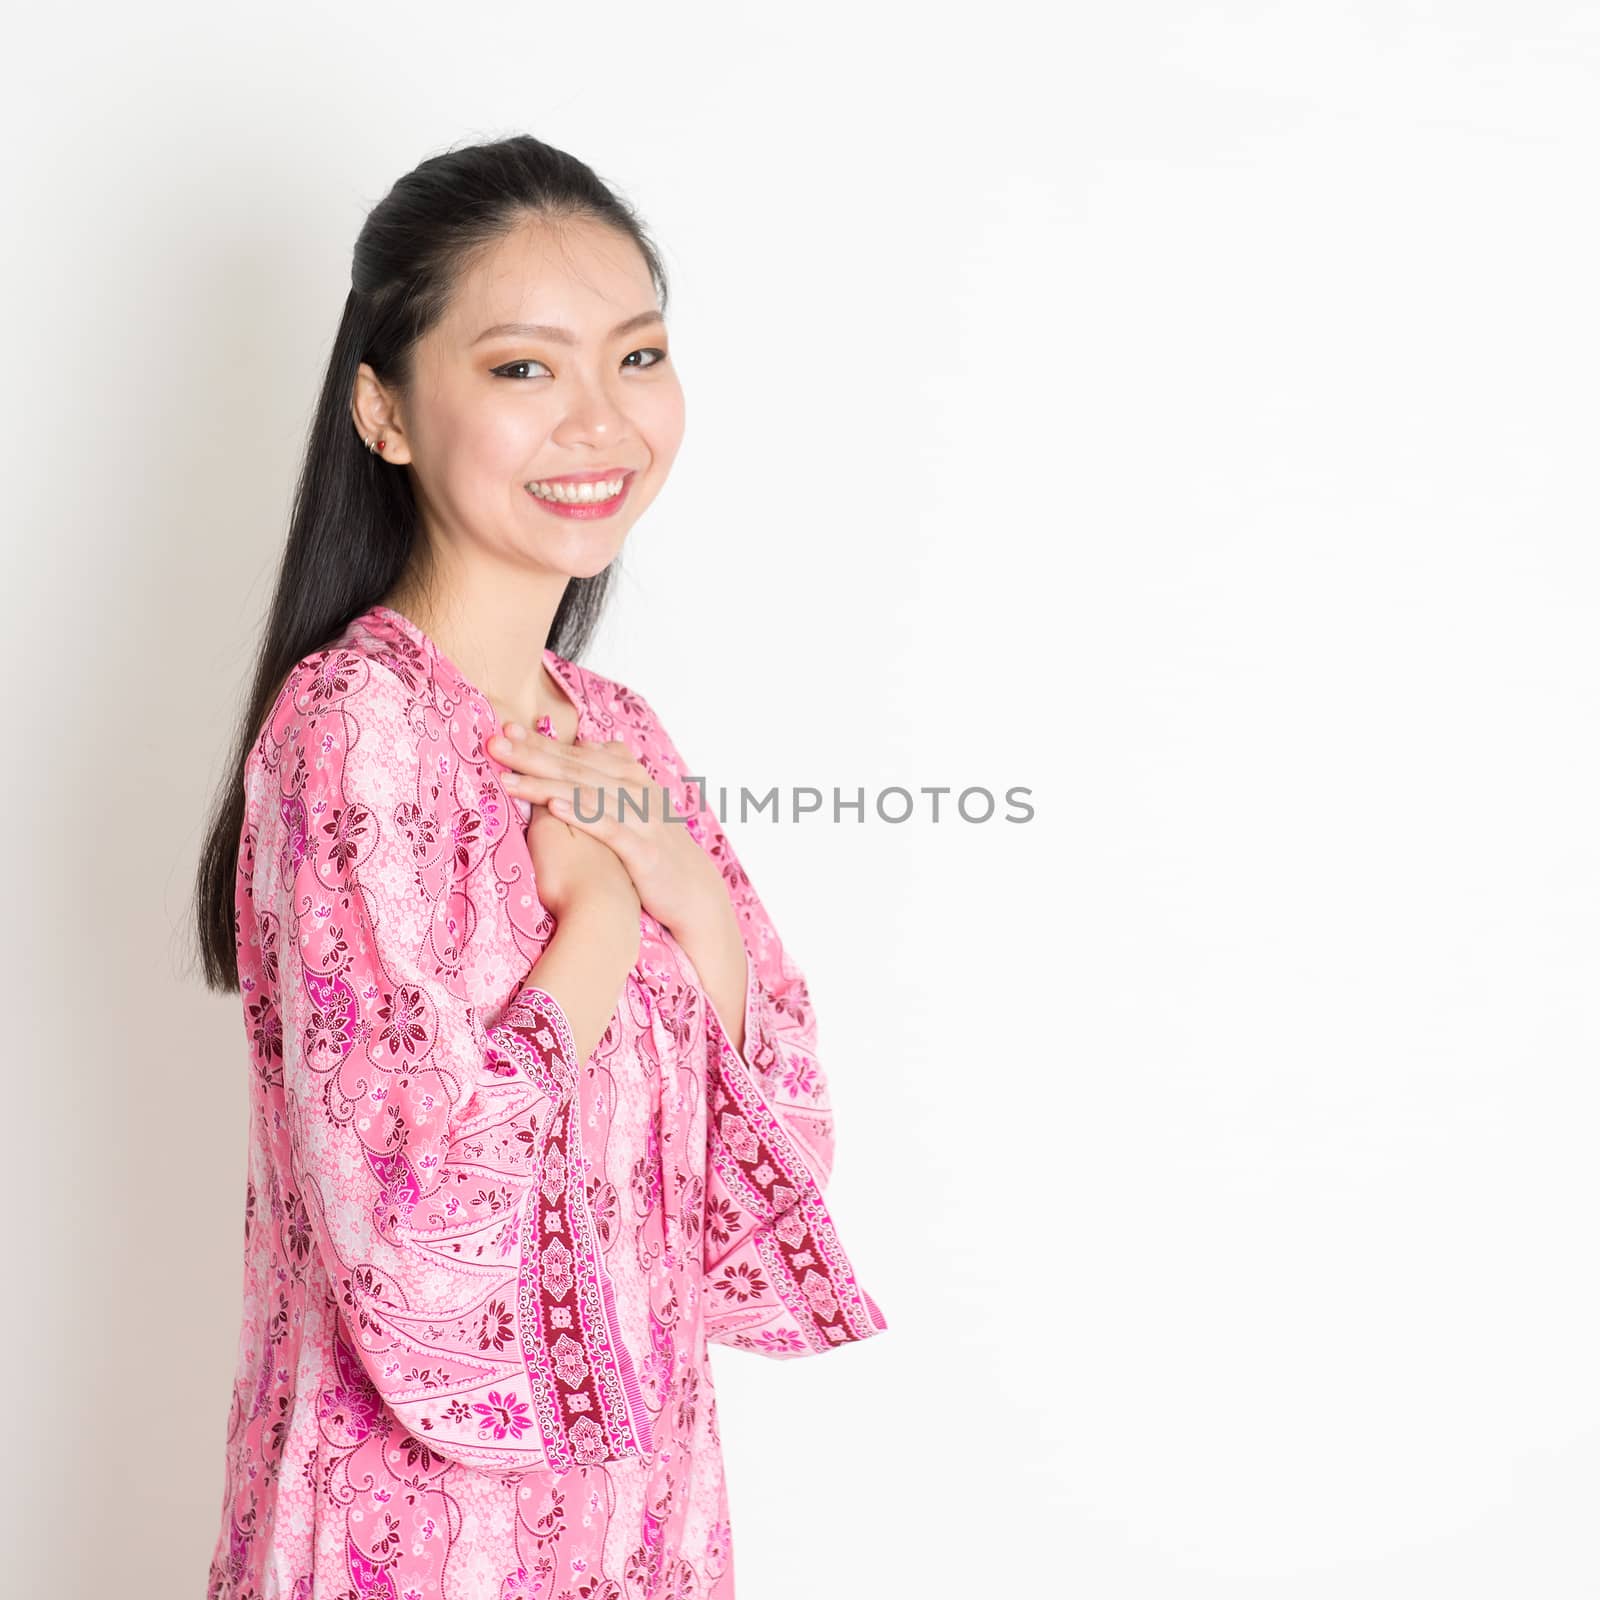 Portrait of happy Southeast Asian girl in pink batik dress standing on plain background.